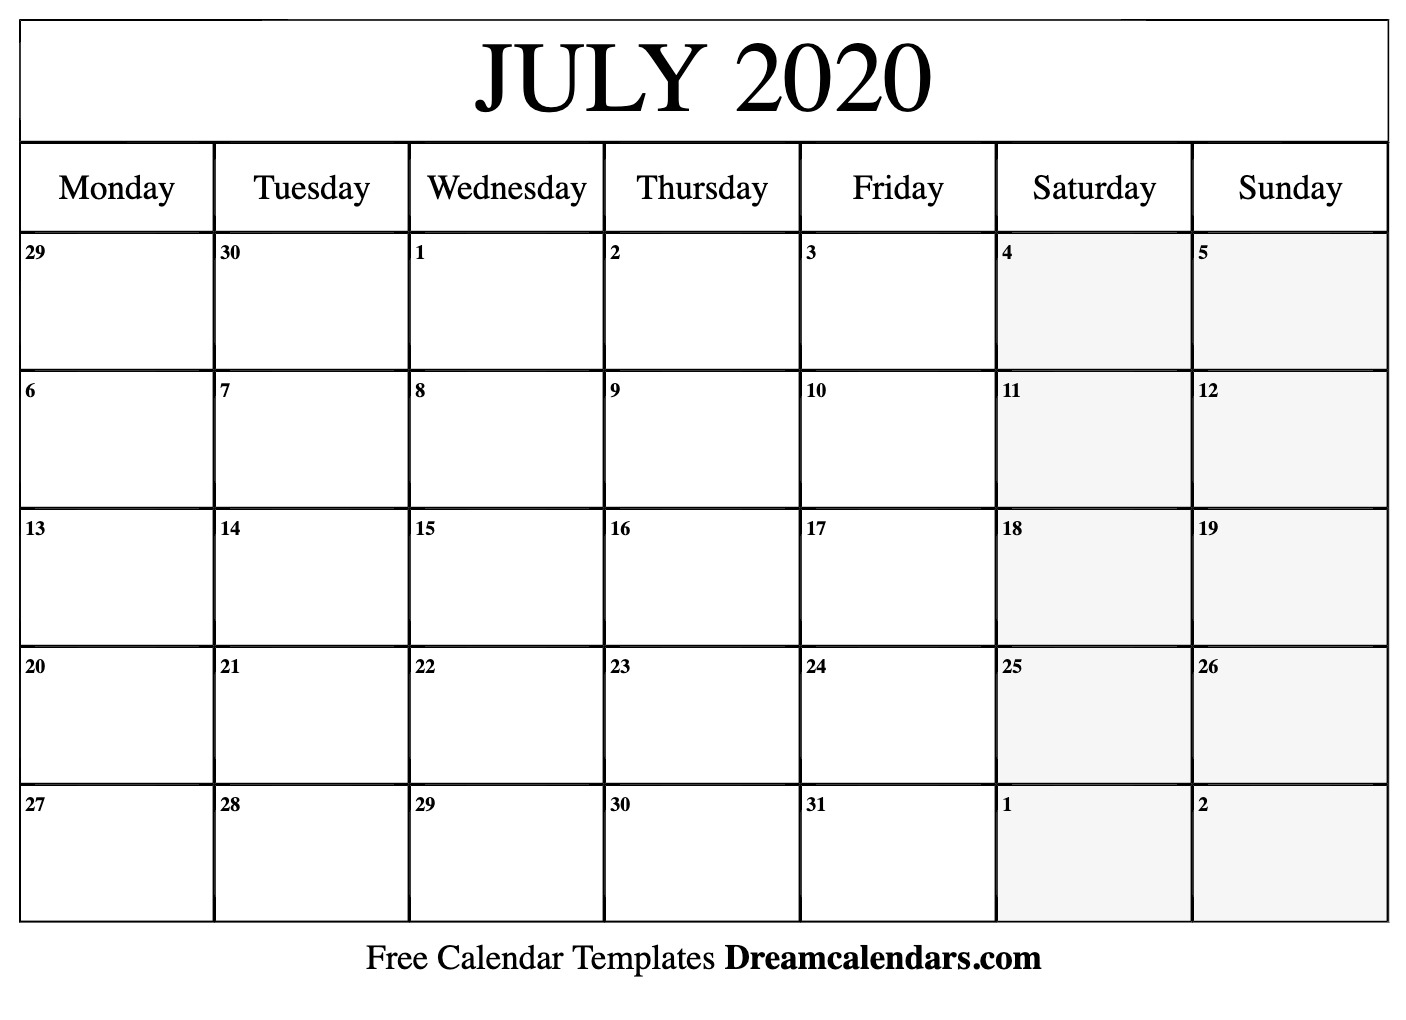 July Calendar Template 2020 - Wpa.wpart.co